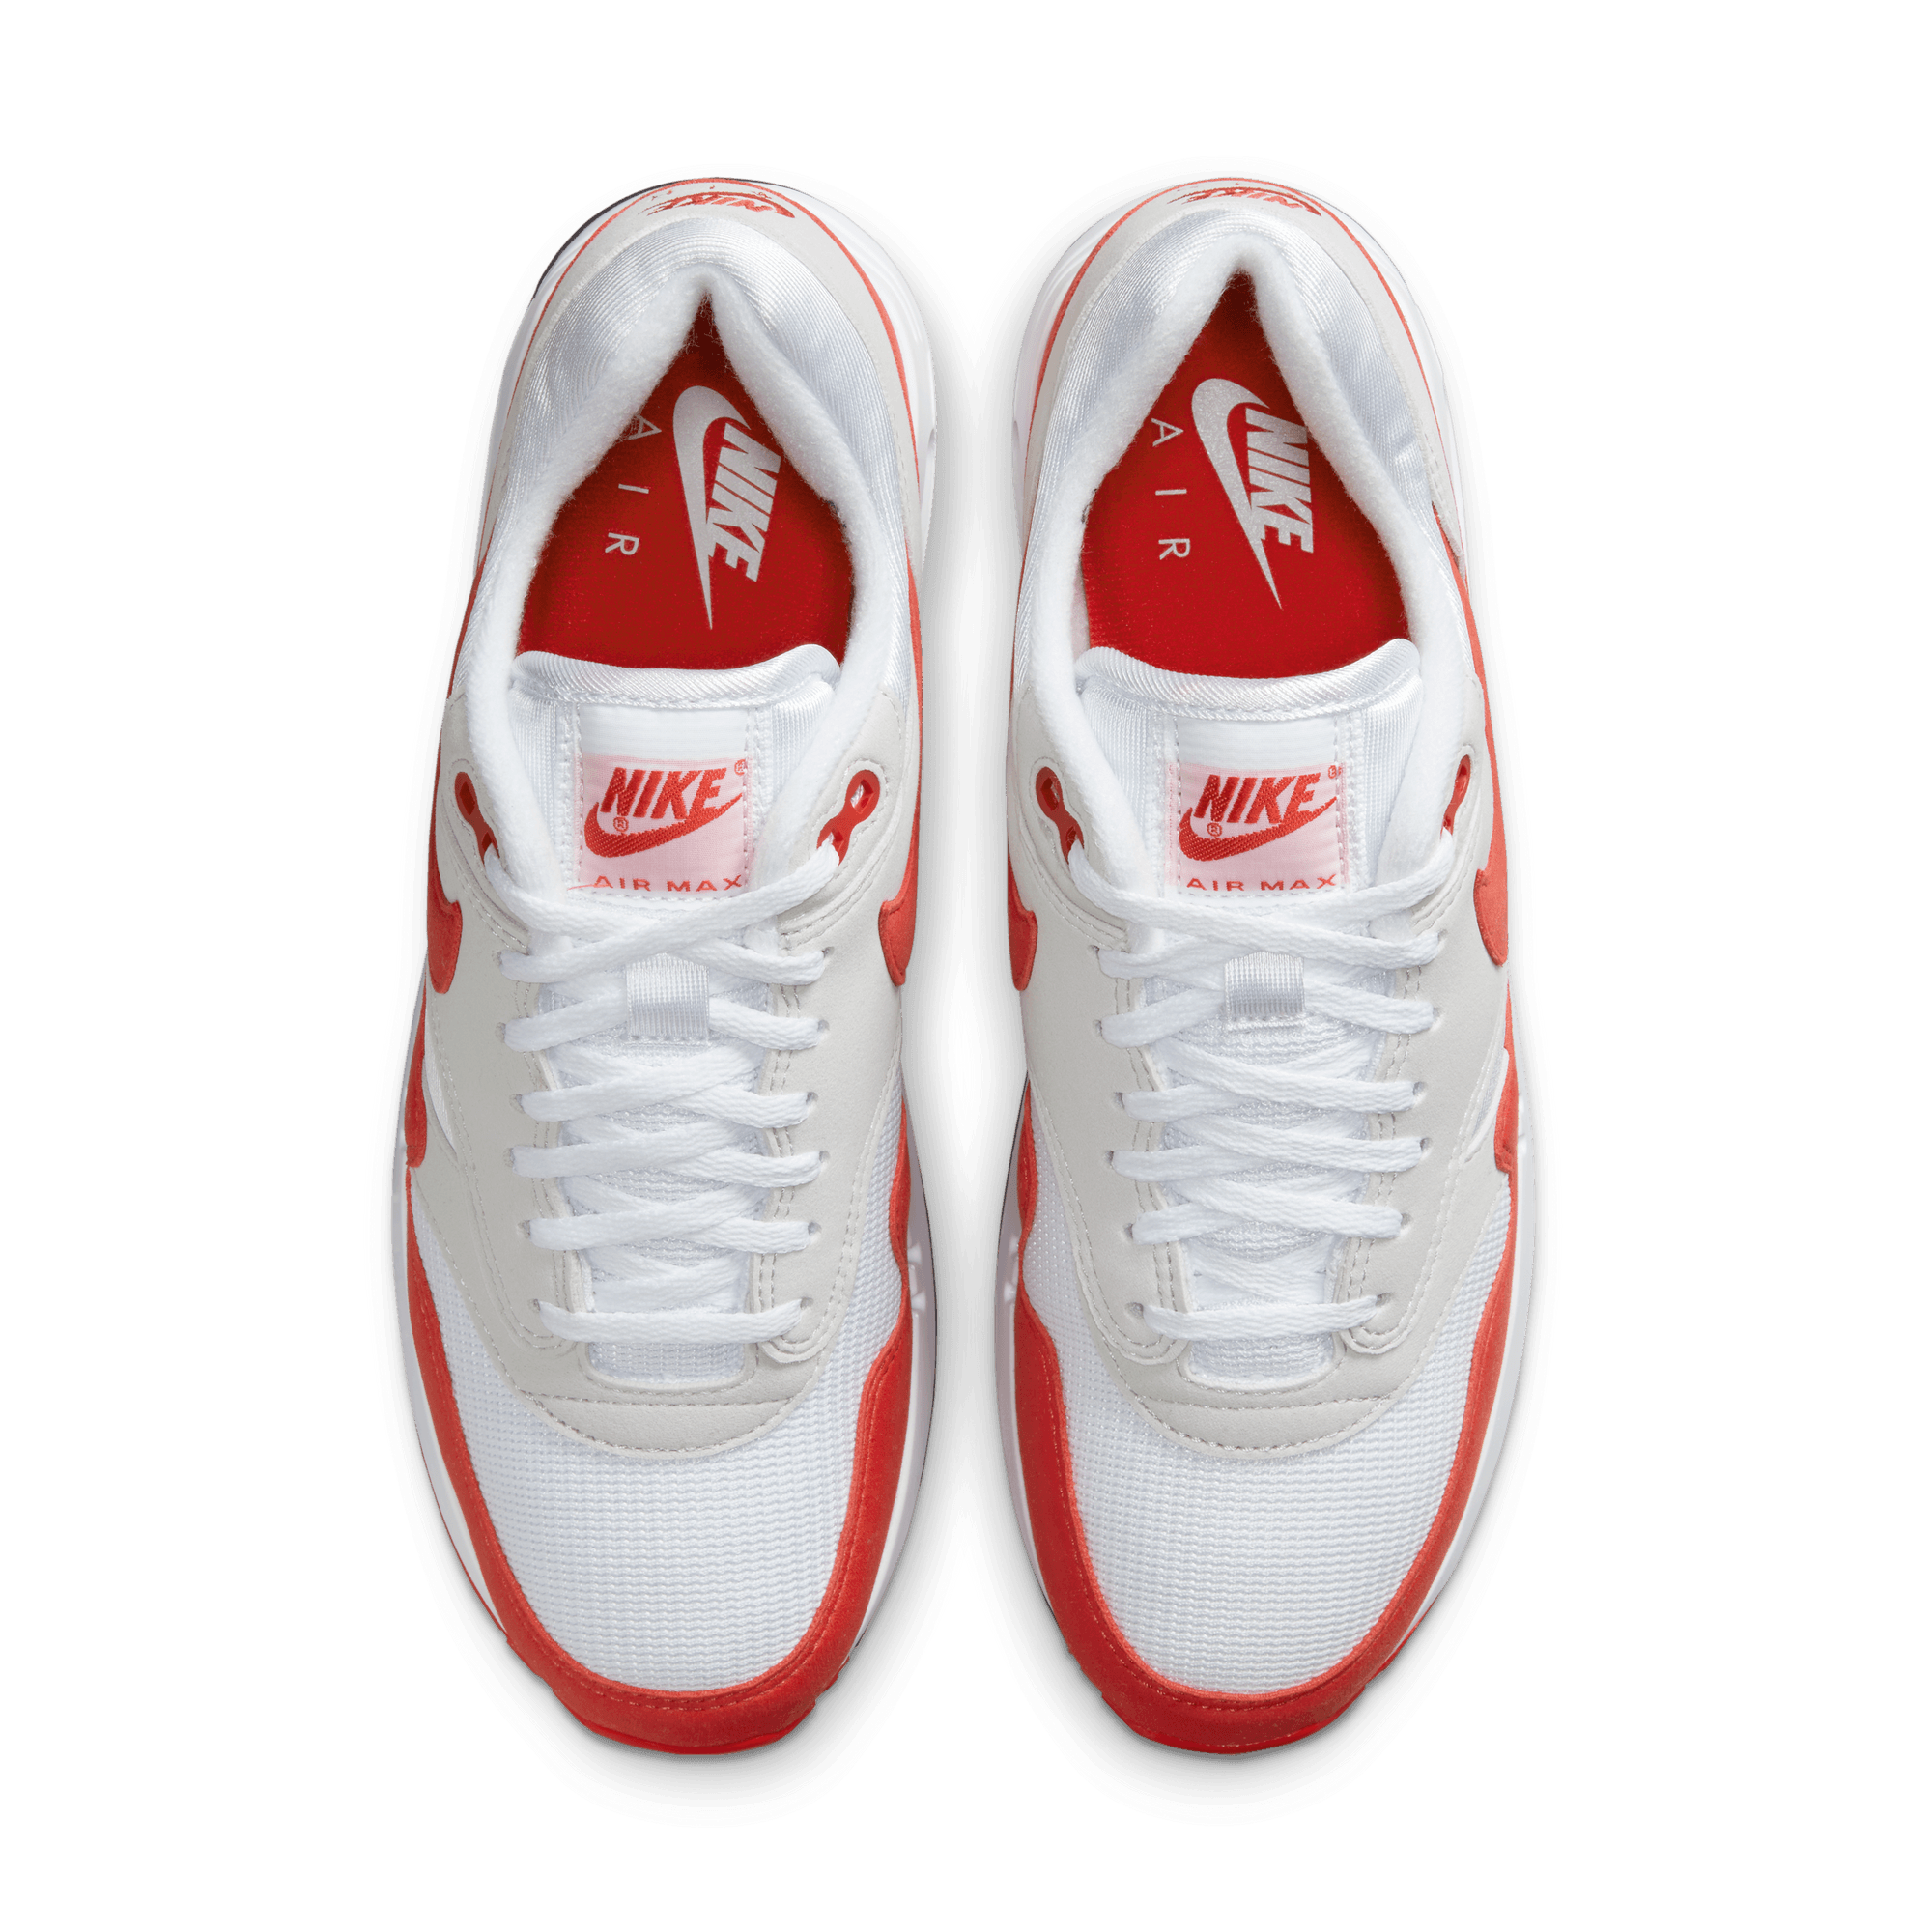 NIKE FOOTWEAR Nike Air Max 1 '86 "Big Bubble Sport Red" - Men's